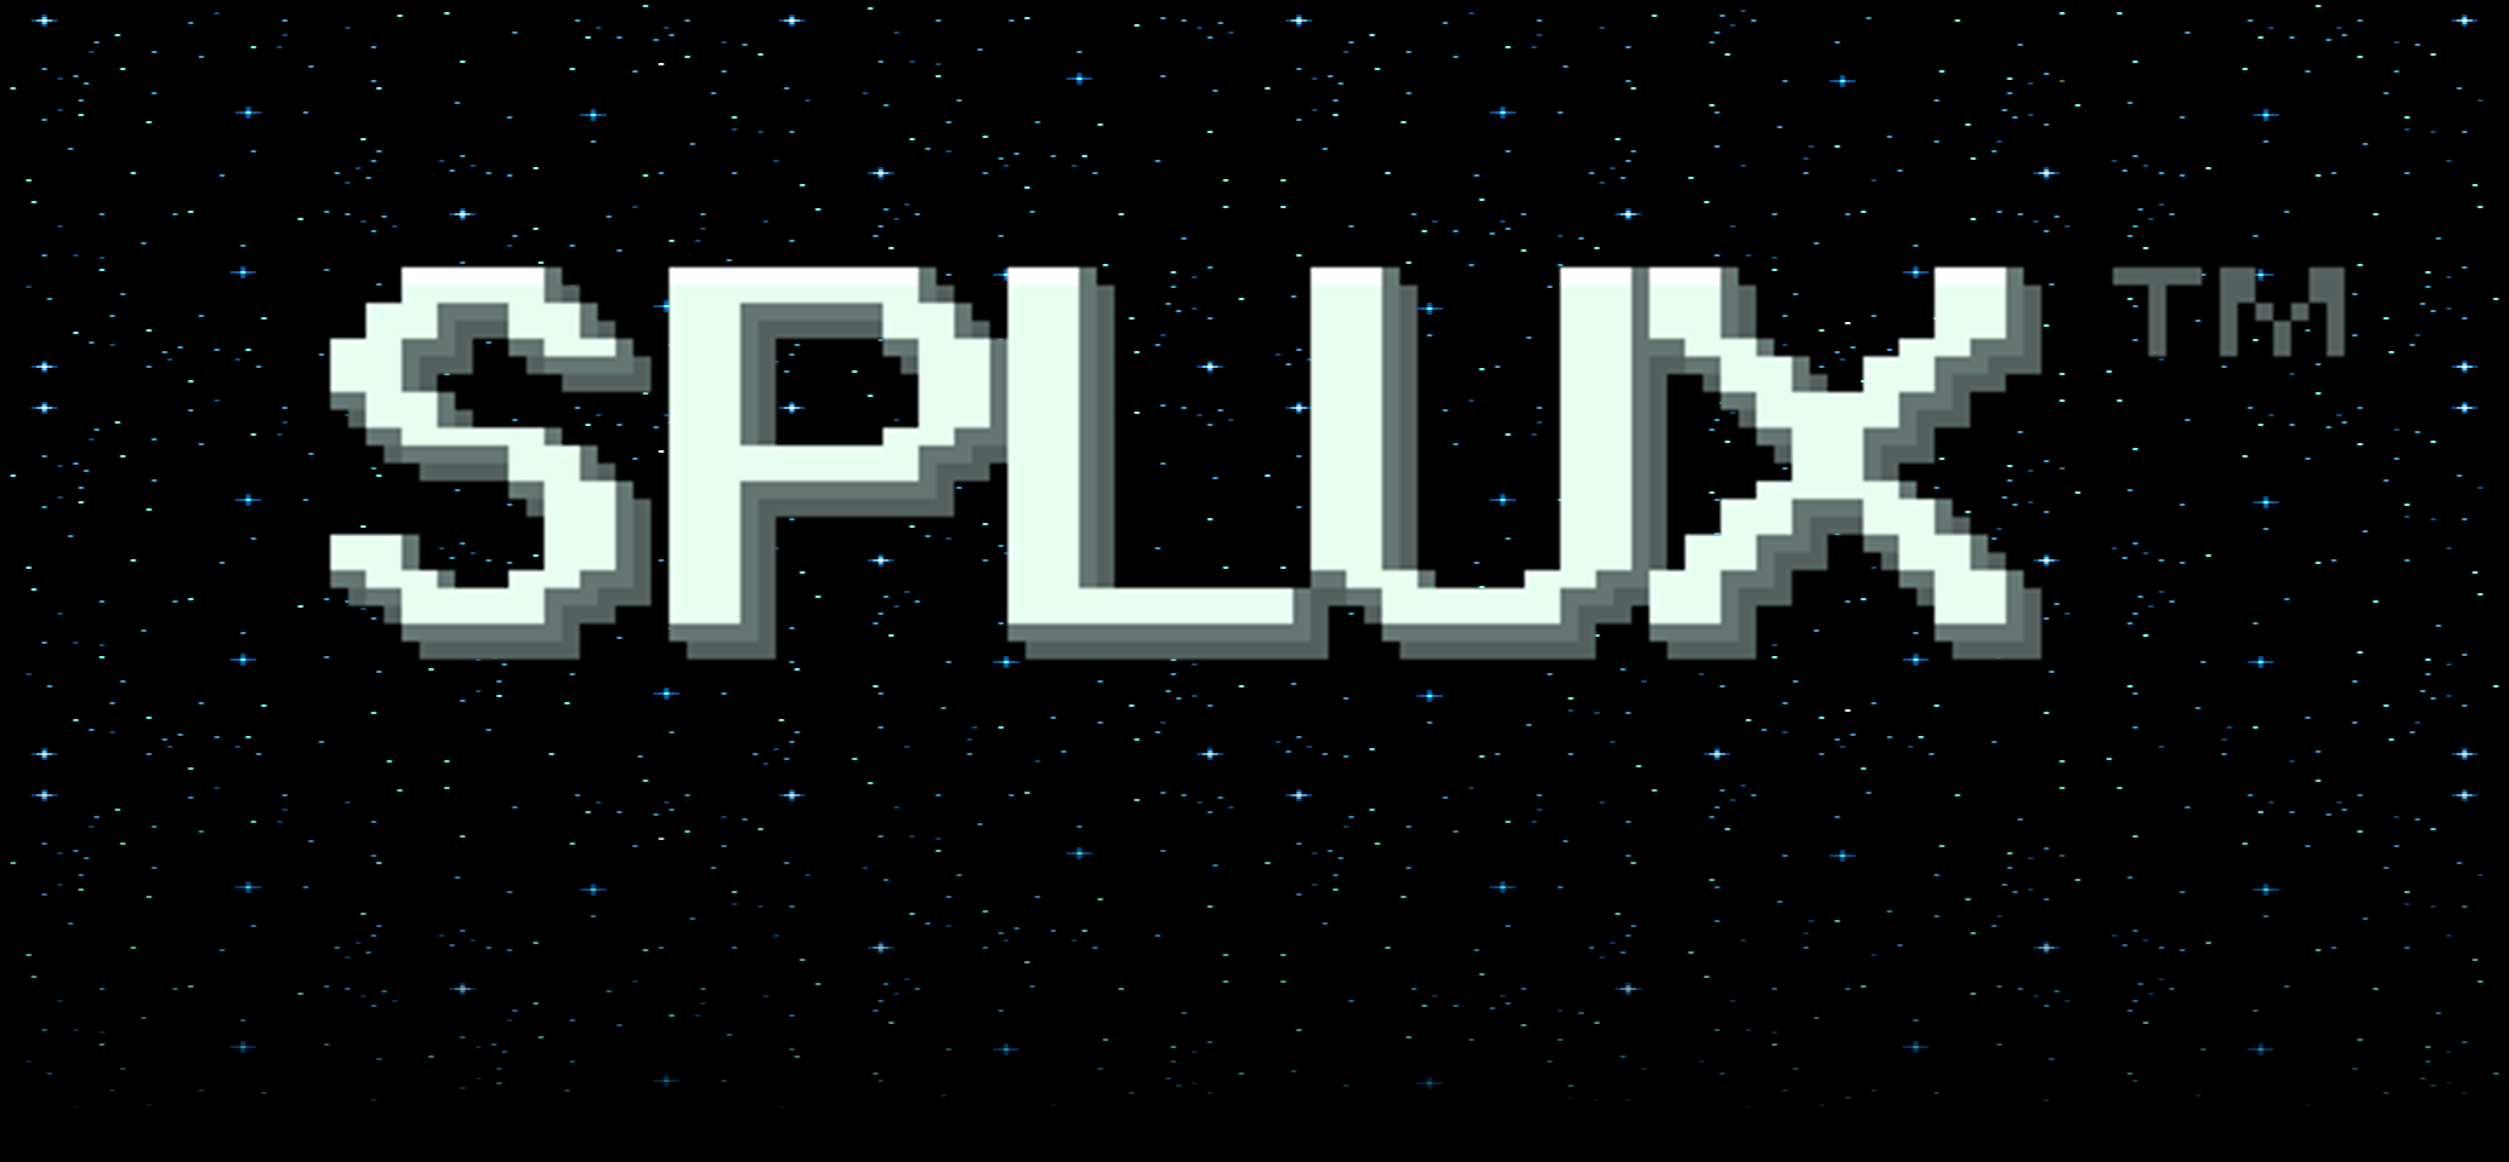 Splux - 4 Way Tetris!